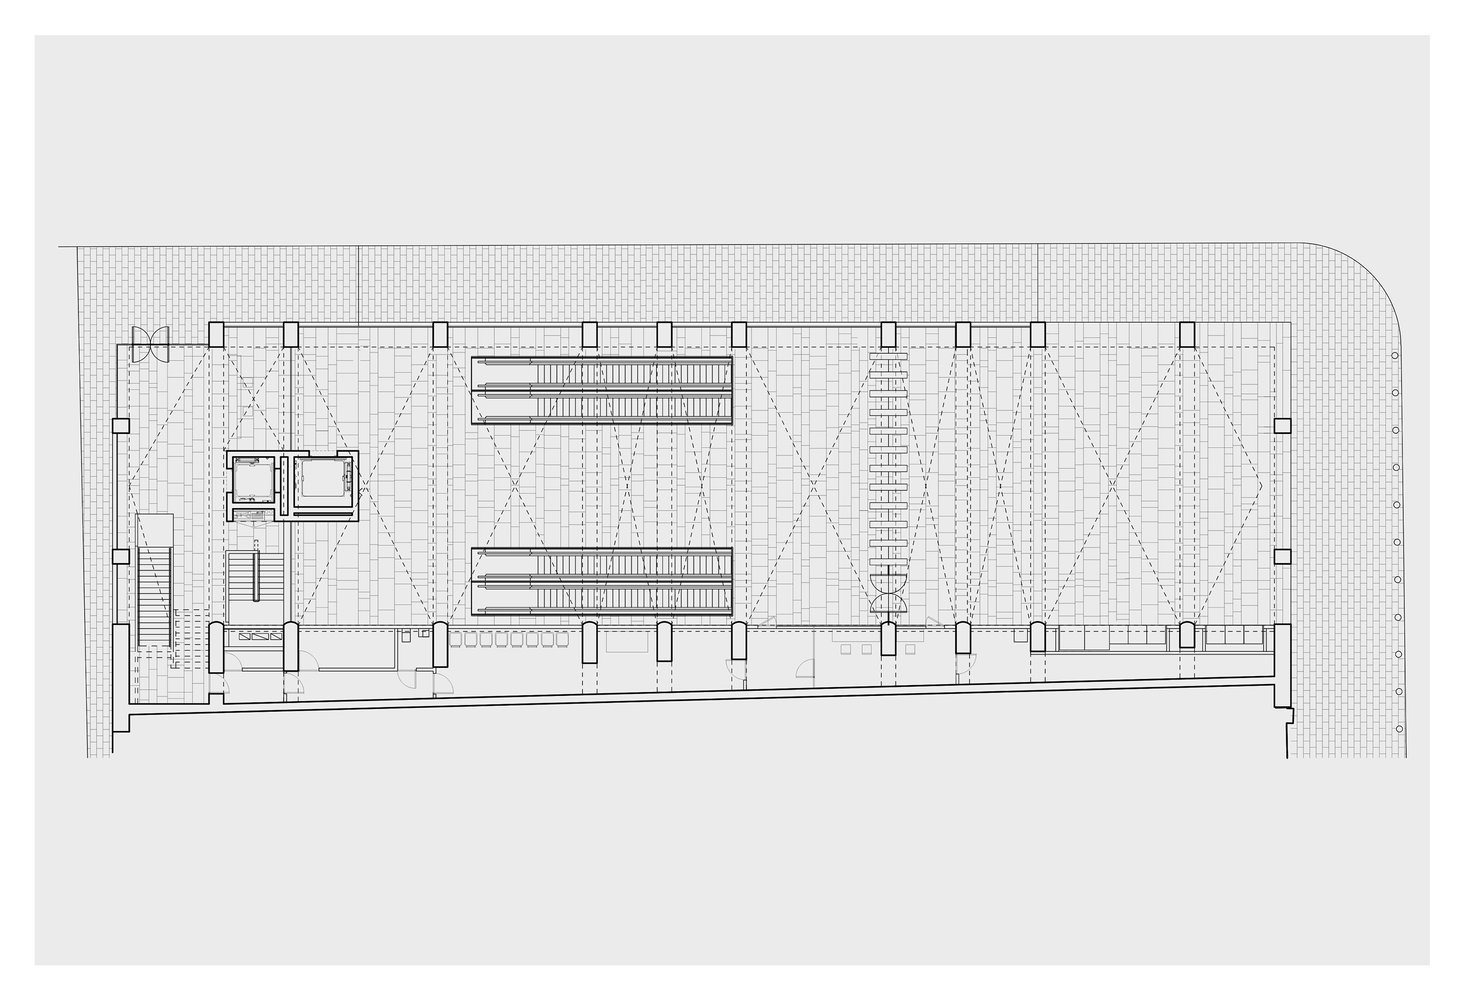 The ground floor plan of Plaza de Armas Metro Station Building